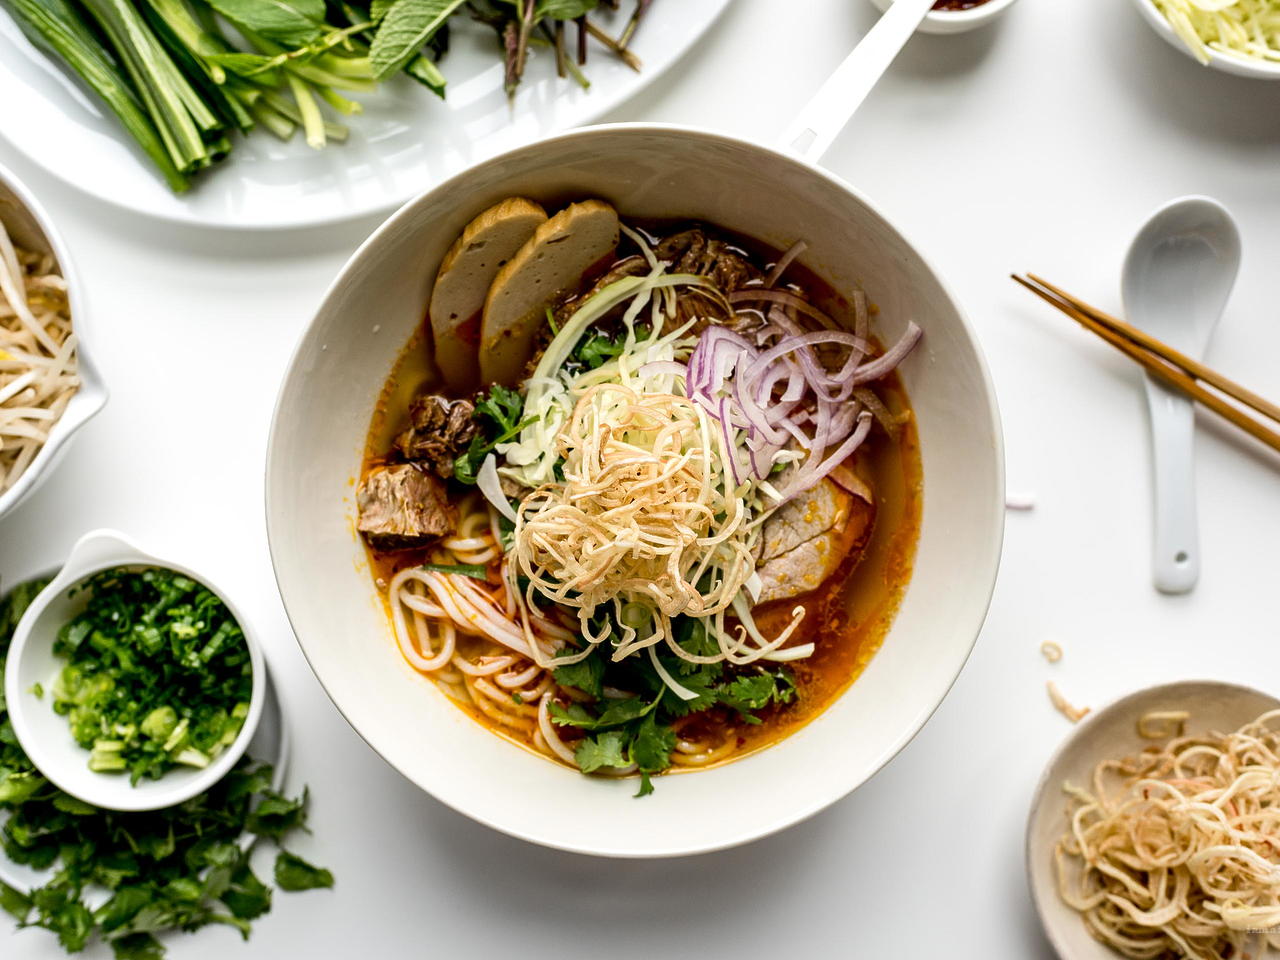 The cuisine of Vietnam’s Central region